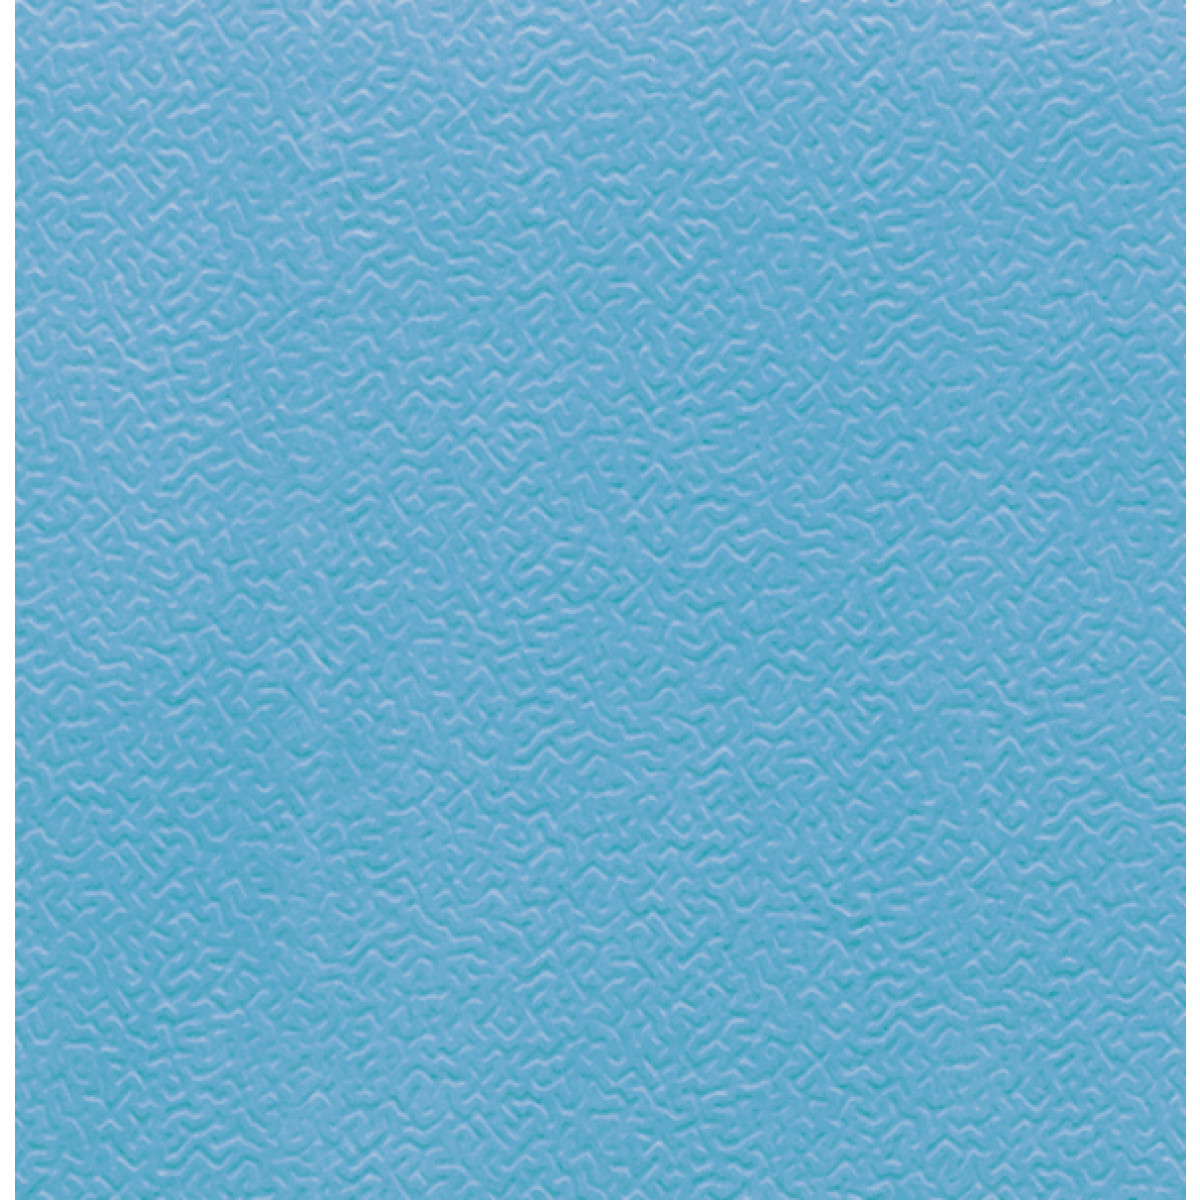 Color:hellblau, Dimensions:1220 mm x 10 m